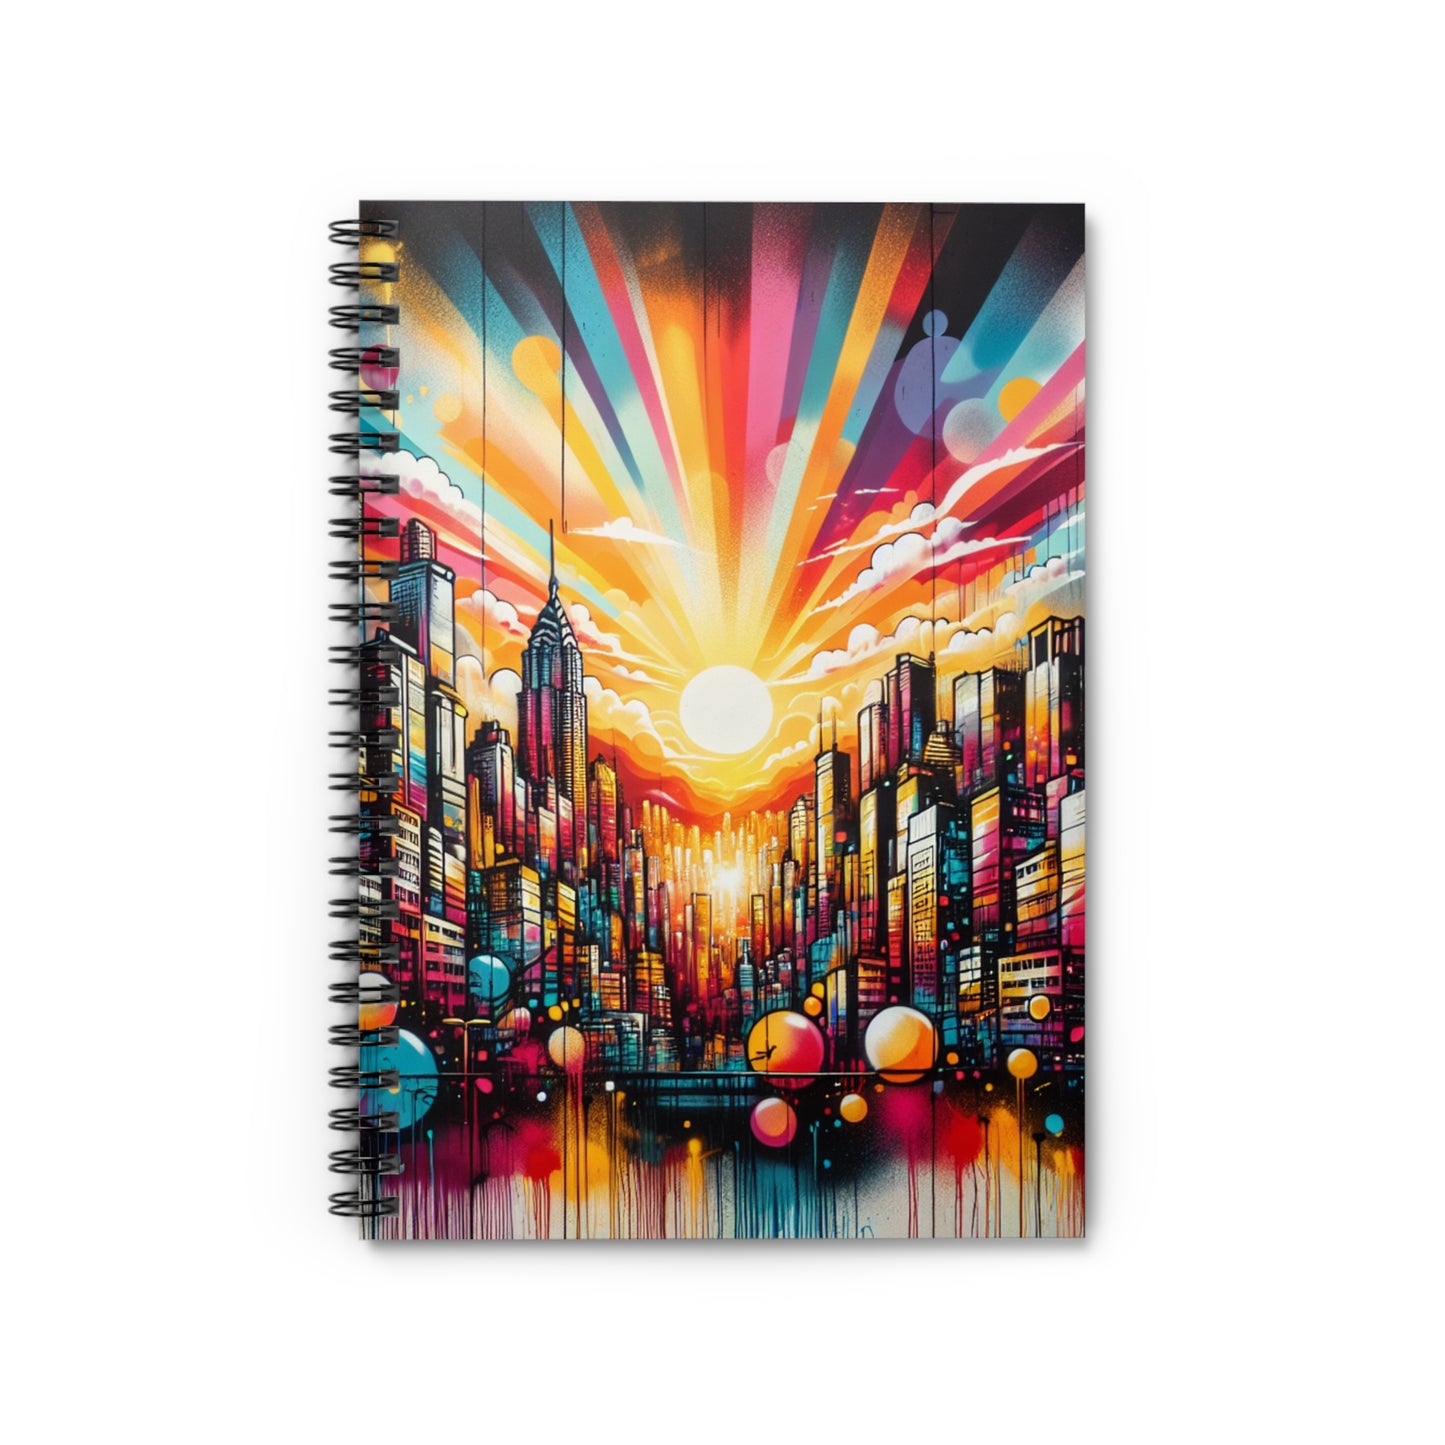 "Cityscape Sunrise" - The Alien Spiral Notebook (Ruled Line) Street Art / Graffiti Style